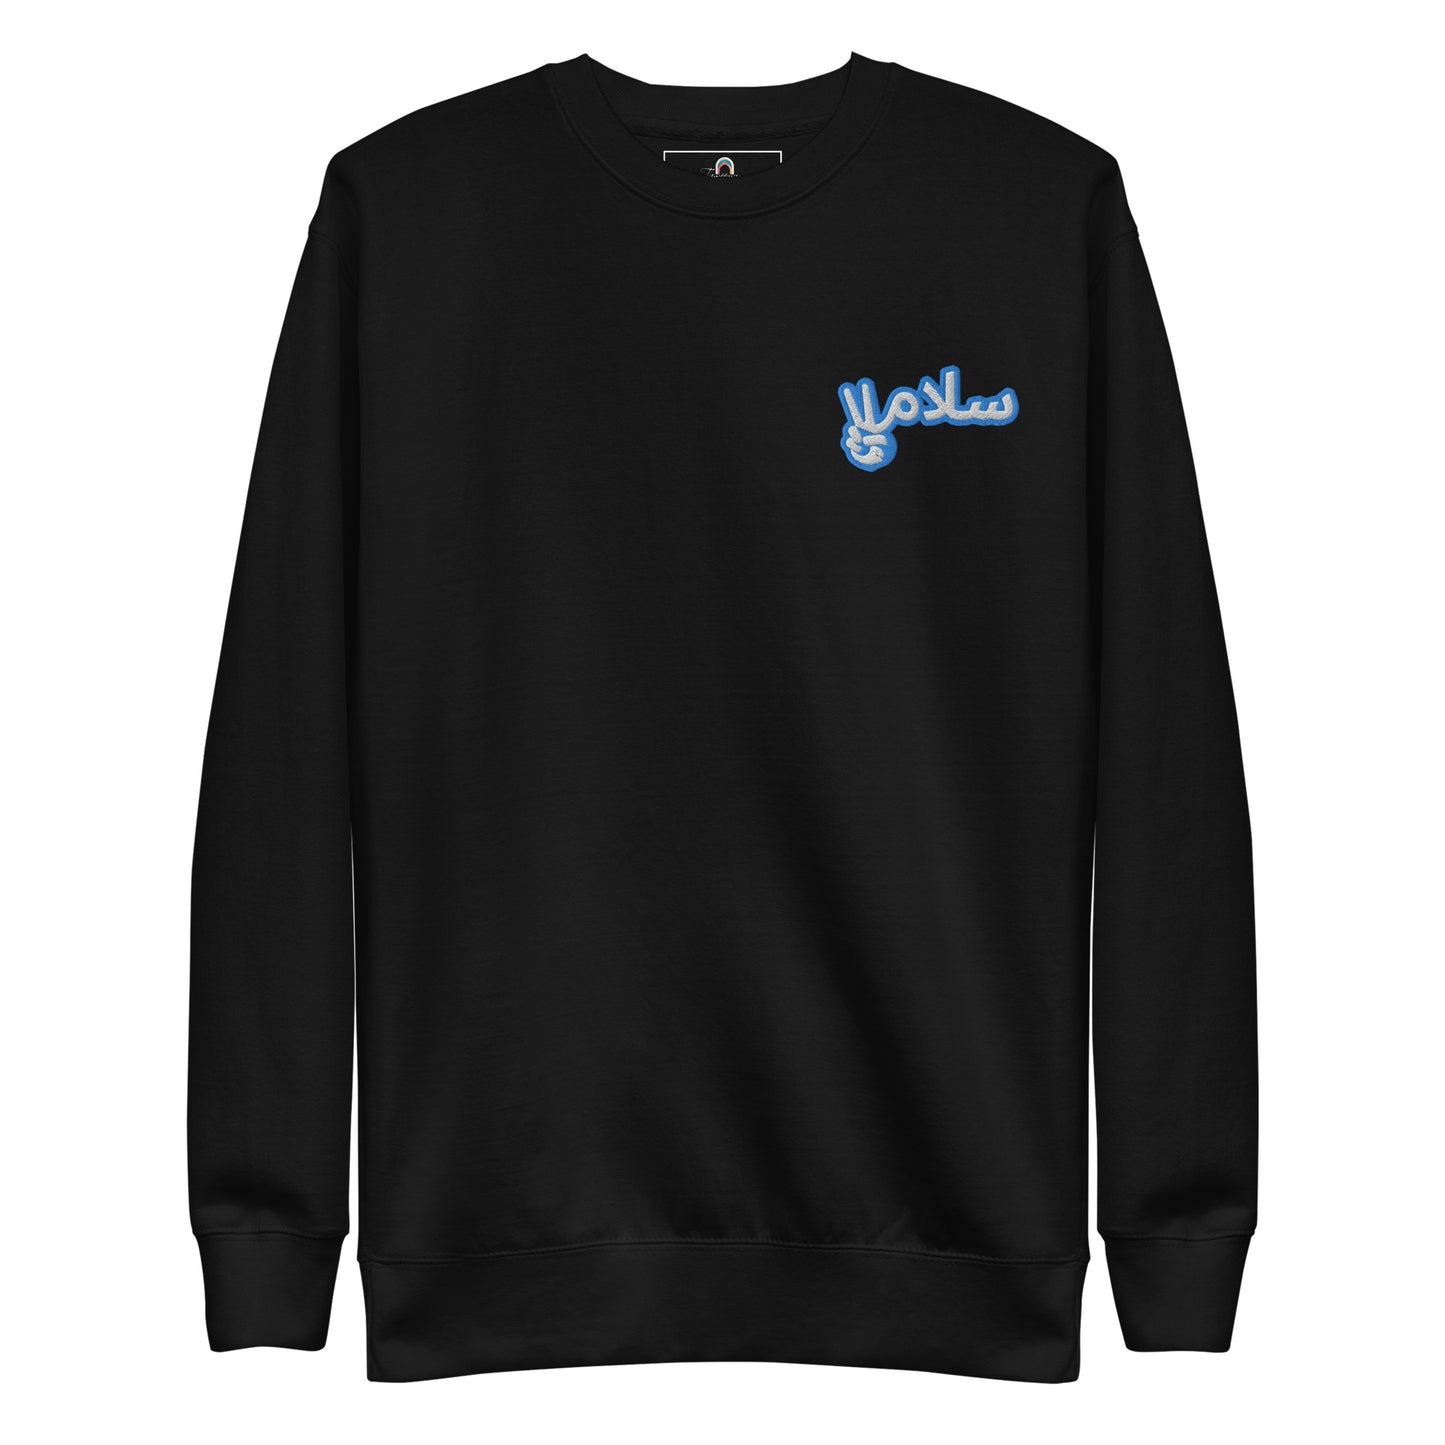 Salaam! | Premium Sweatshirt with Embroidered Emblem Teal